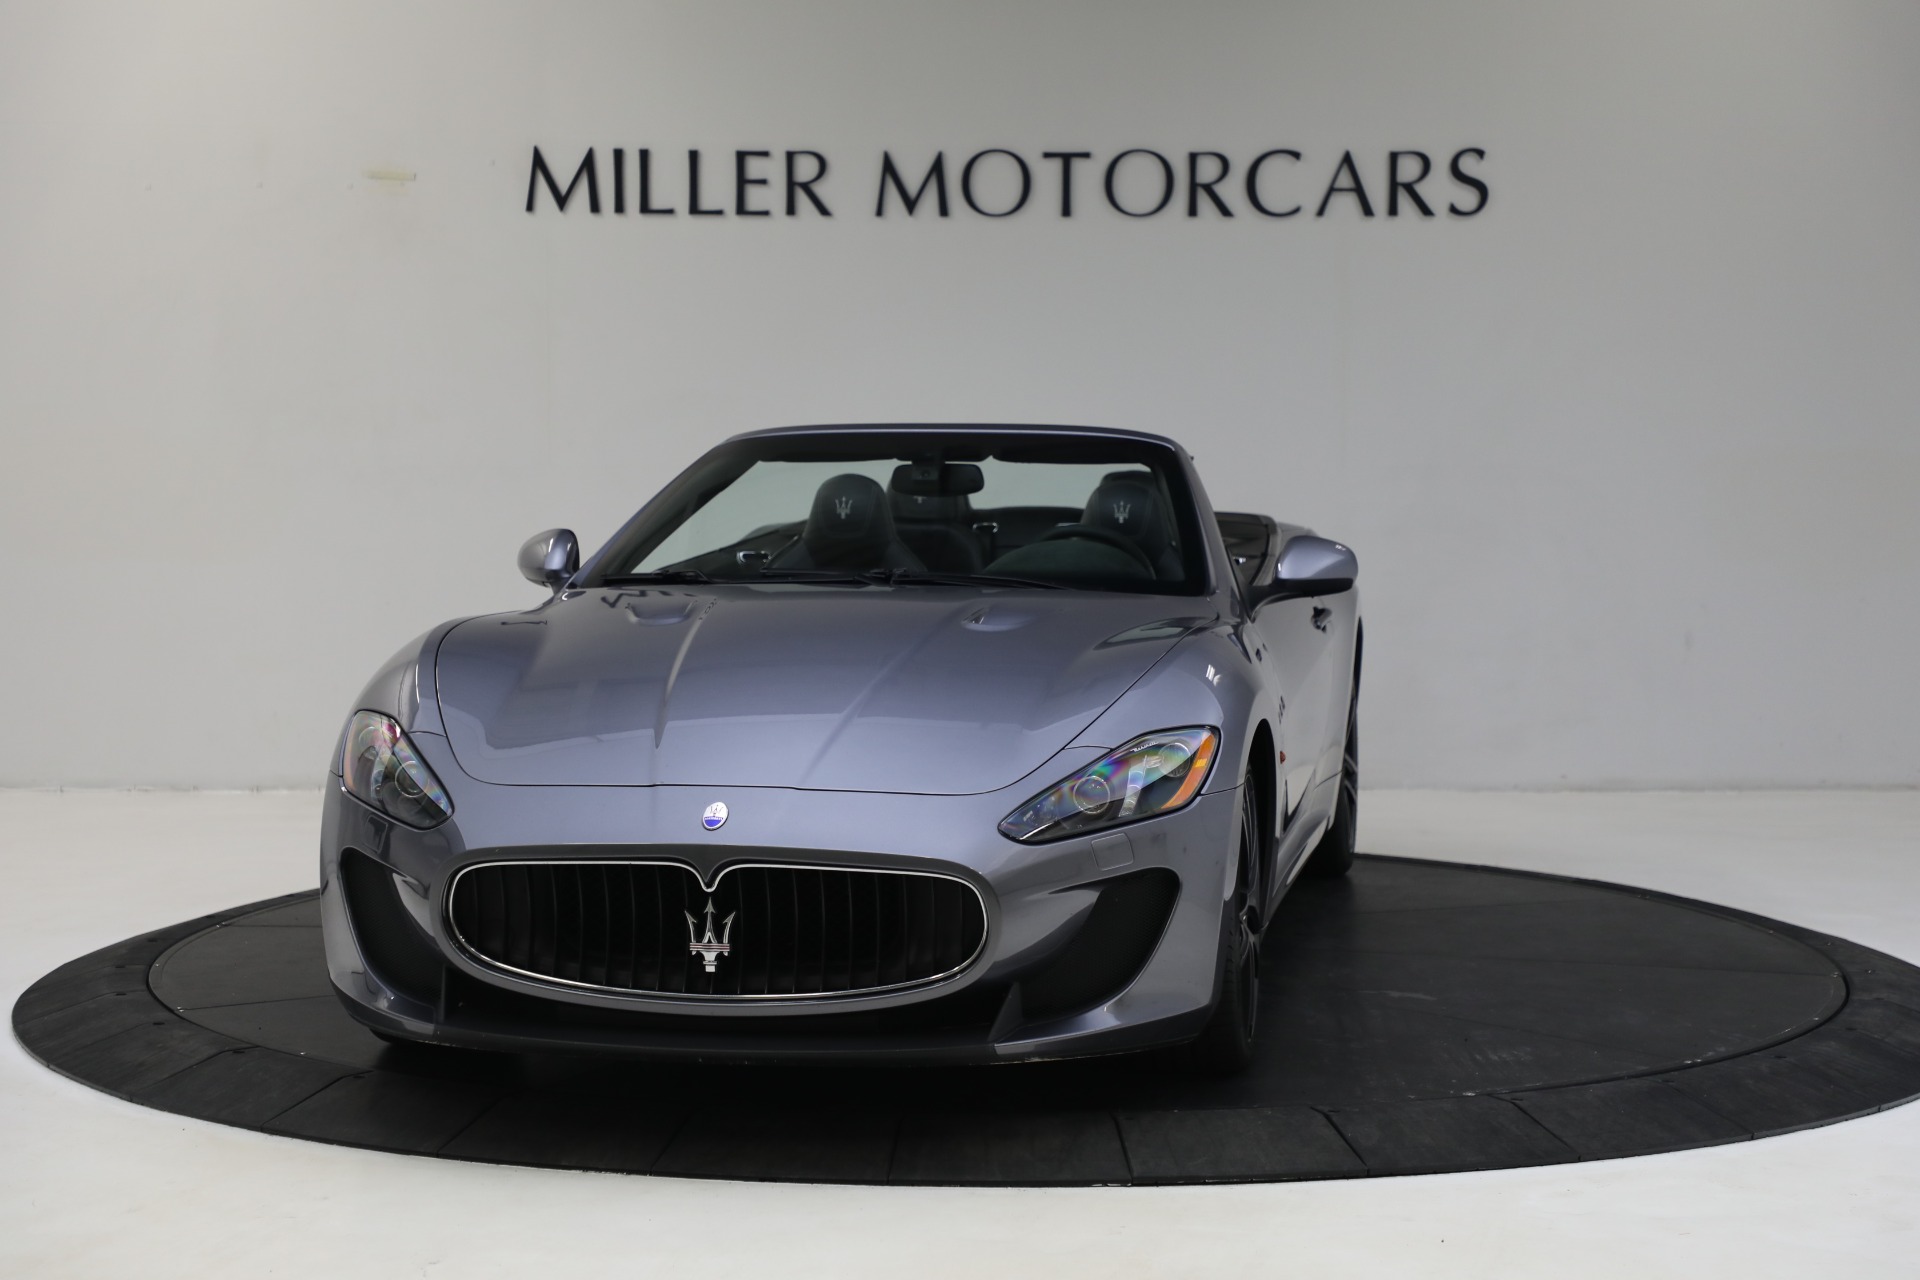 Used 2013 Maserati GranTurismo MC for sale $69,900 at Bentley Greenwich in Greenwich CT 06830 1